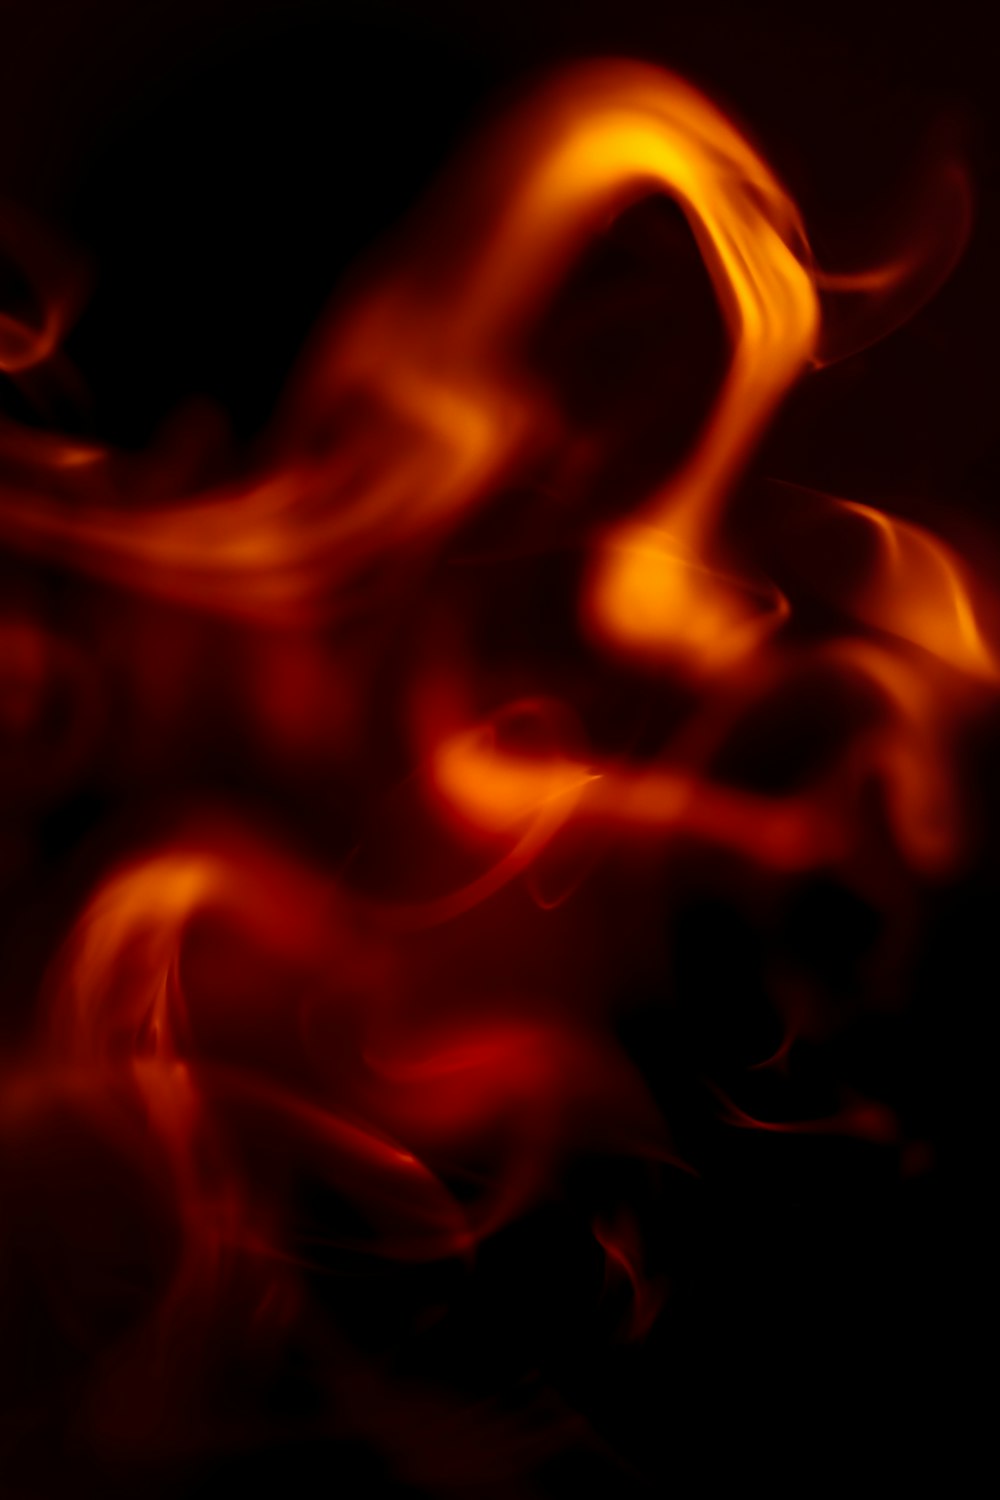 900 Fire Background Images Download Hd Backgrounds On Unsplash